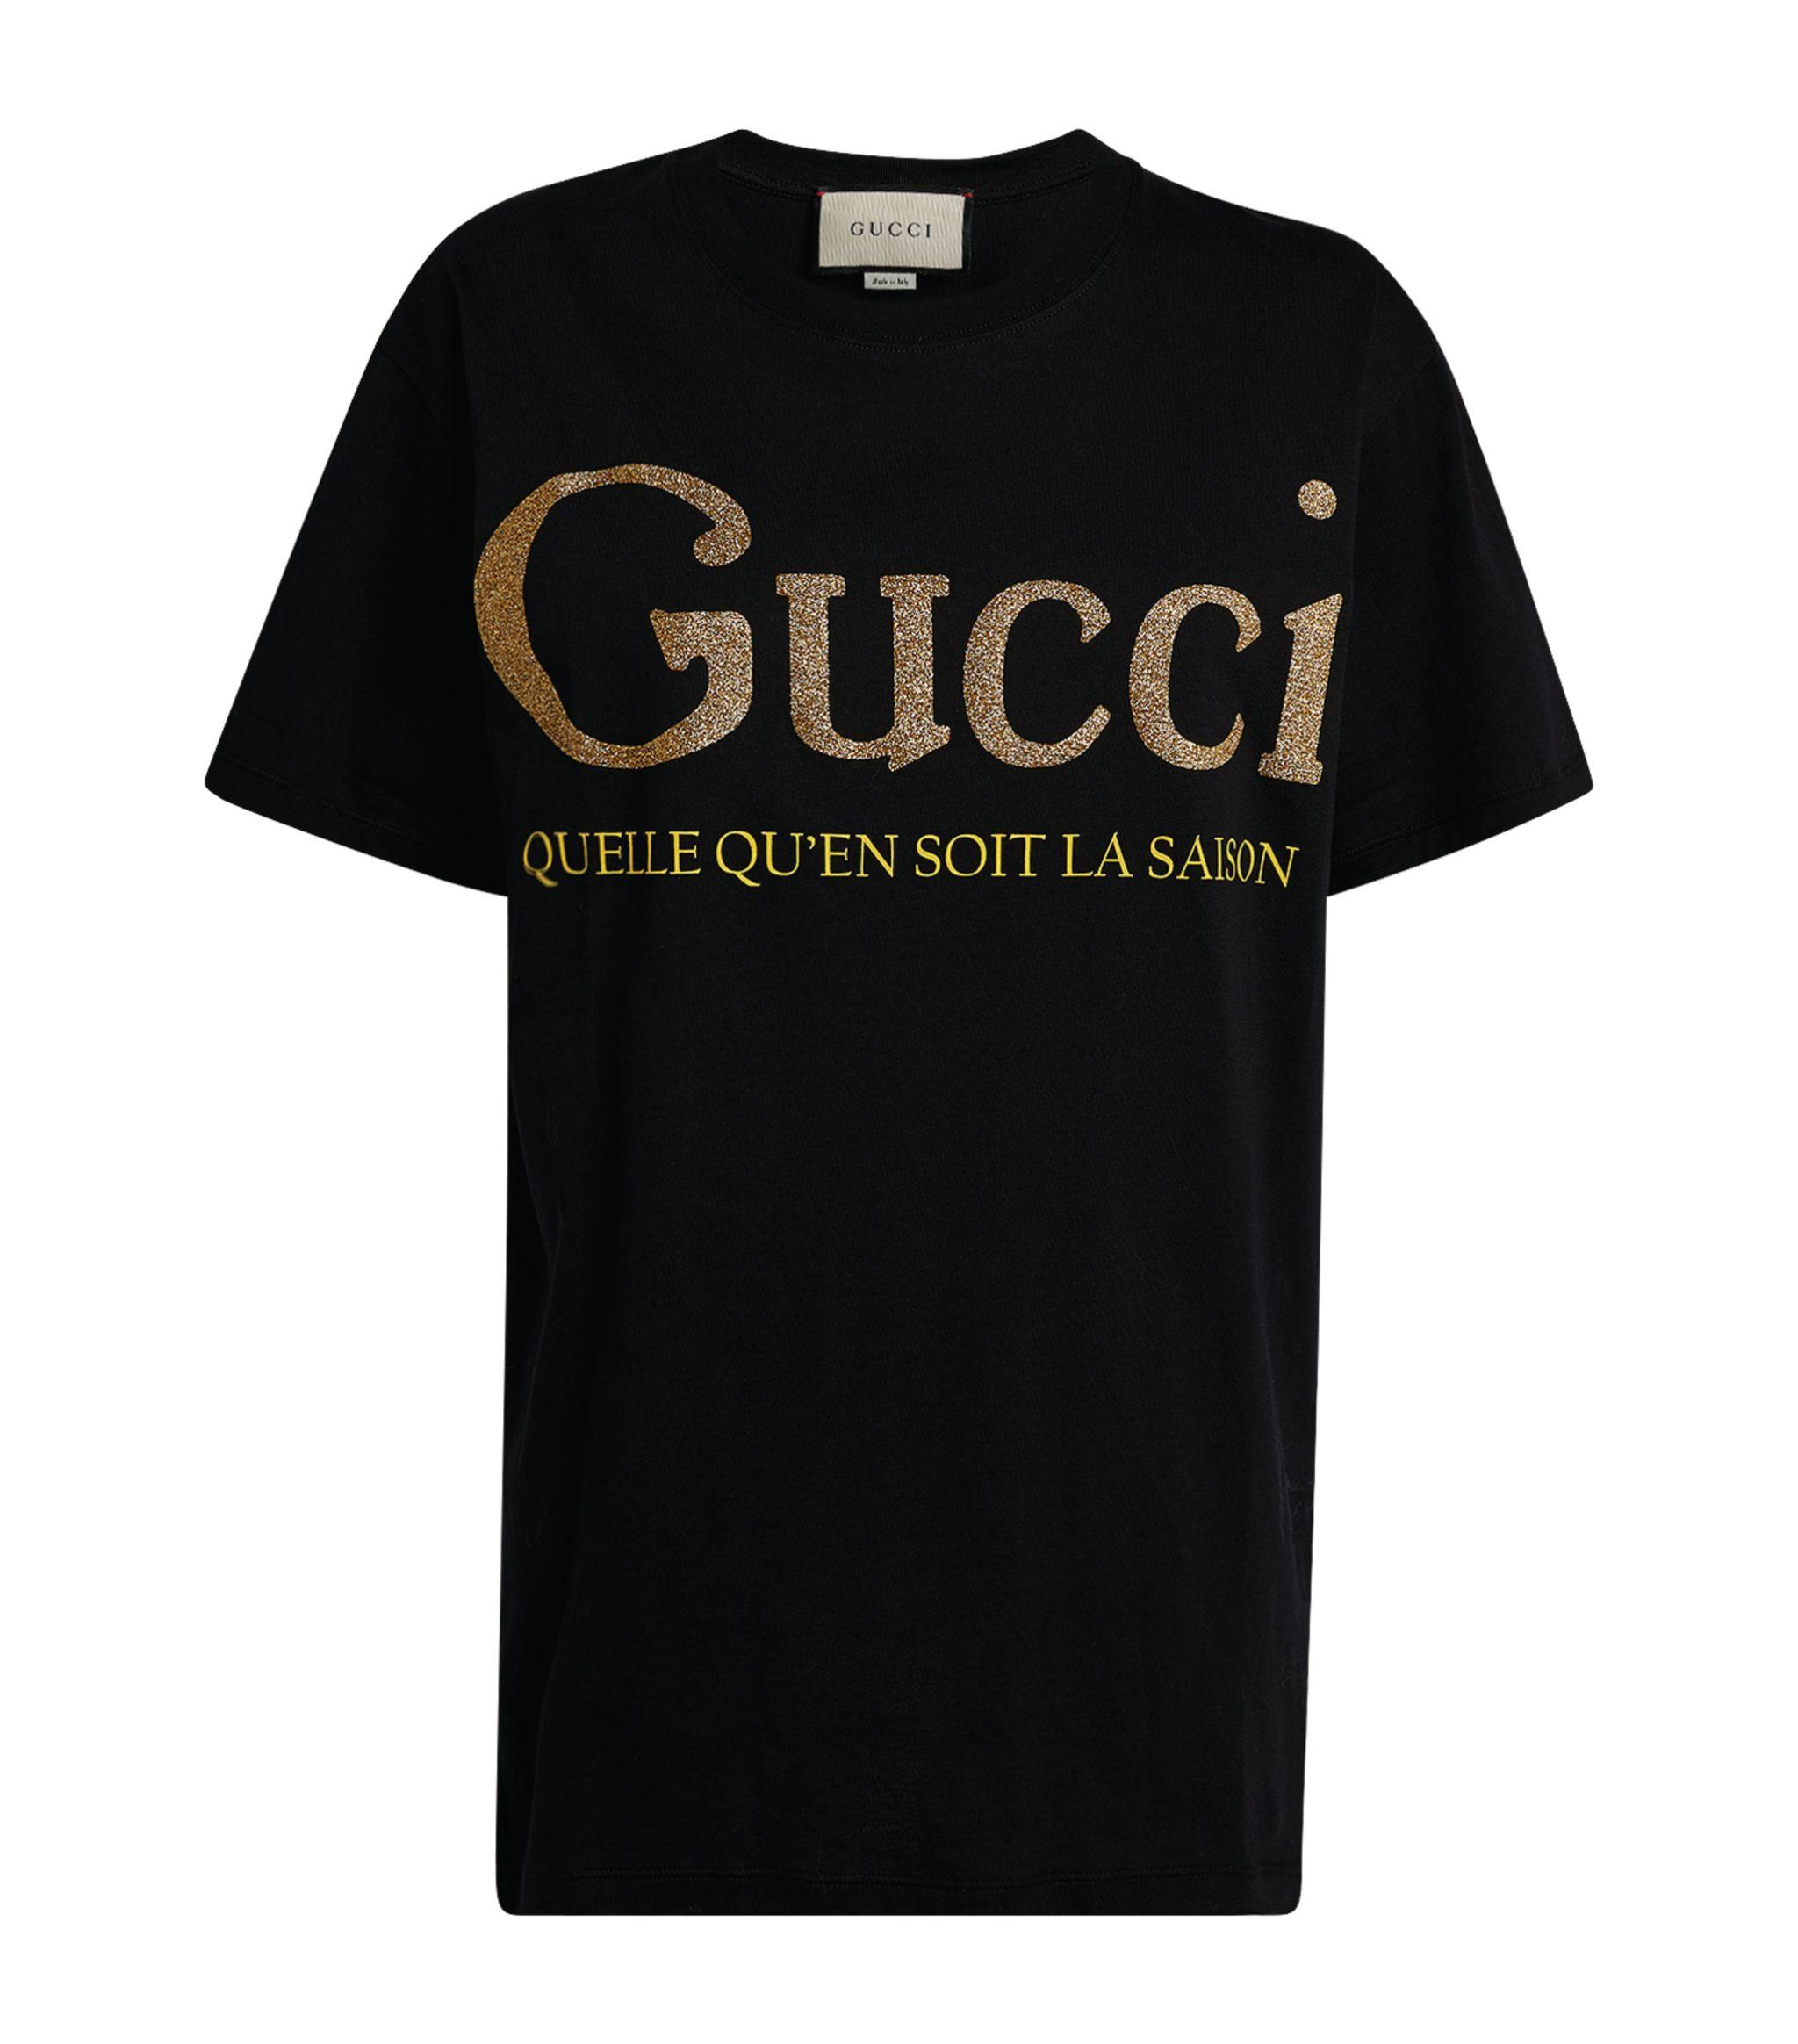  Gucci  Cotton Slogan  T shirt in Black Gold Black Save 